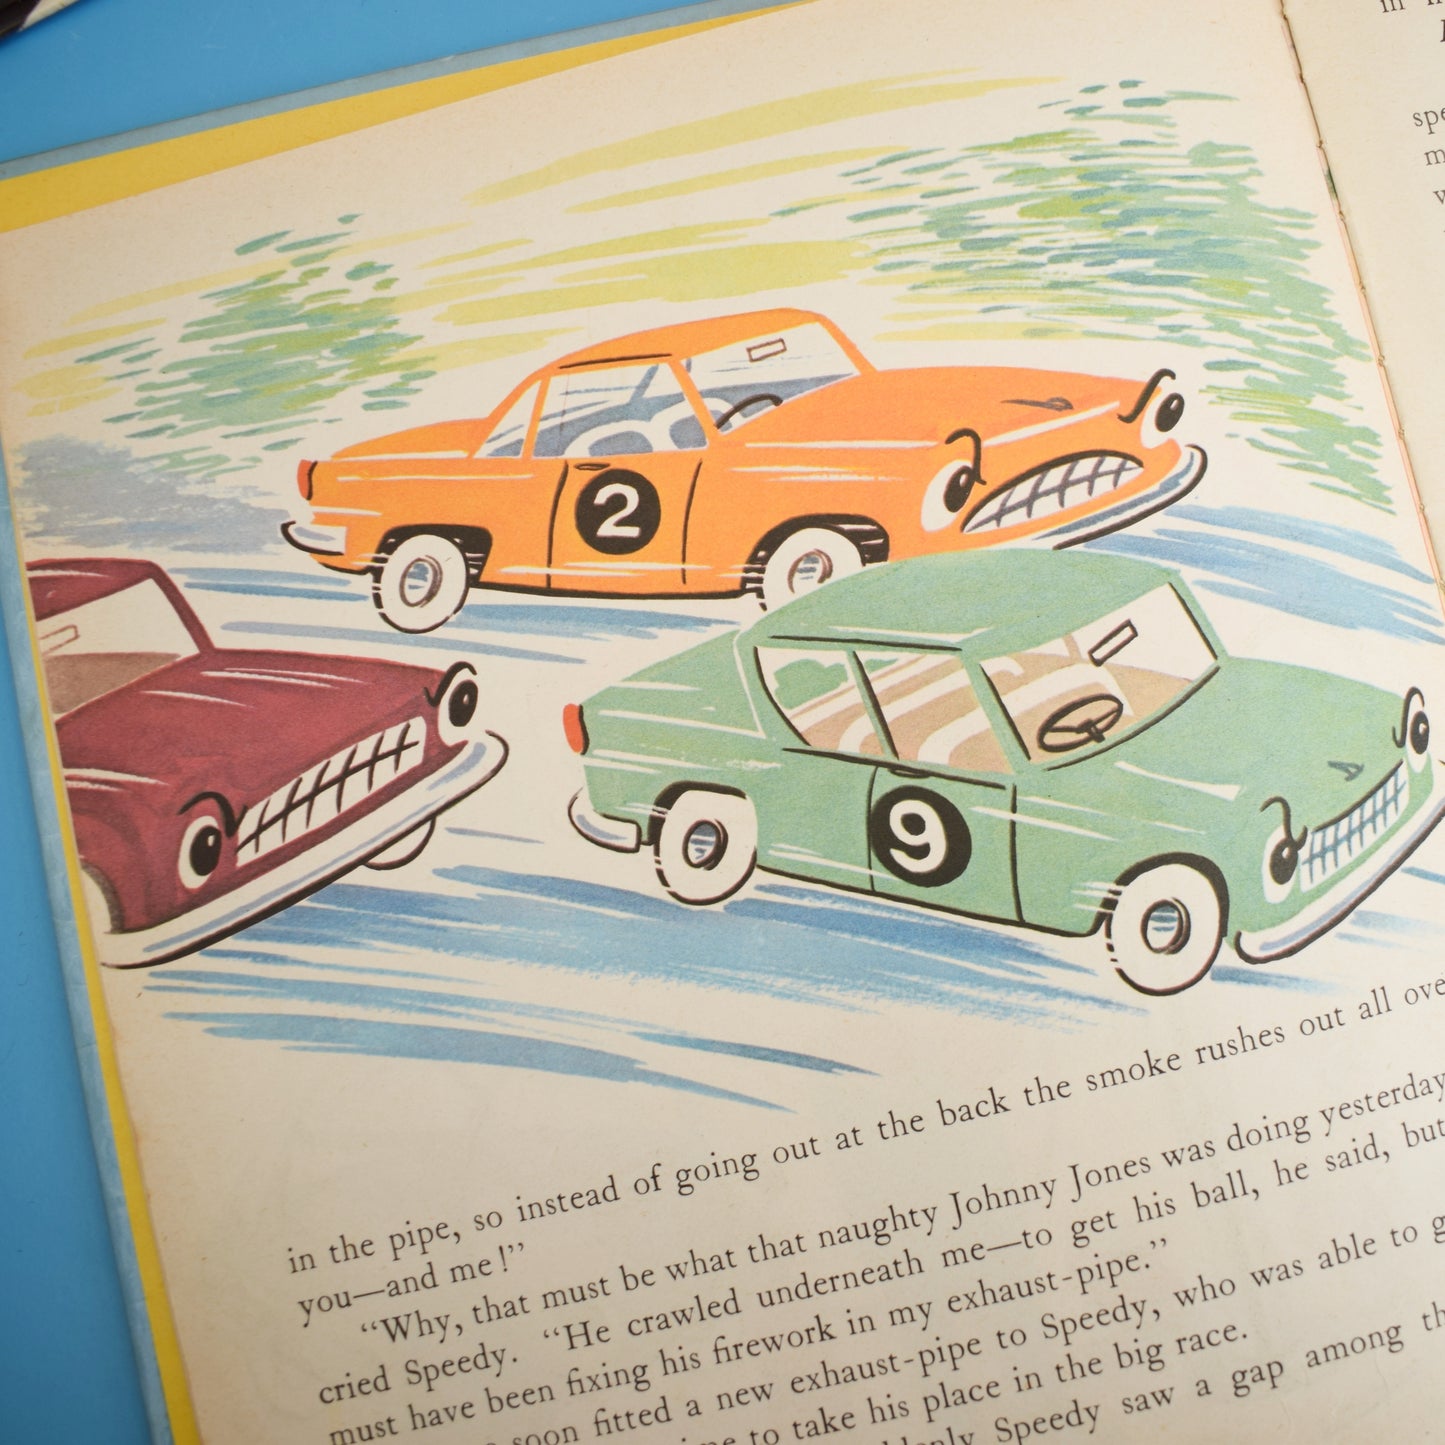 Vintage 1960s Kids Books- Speedy The Mini